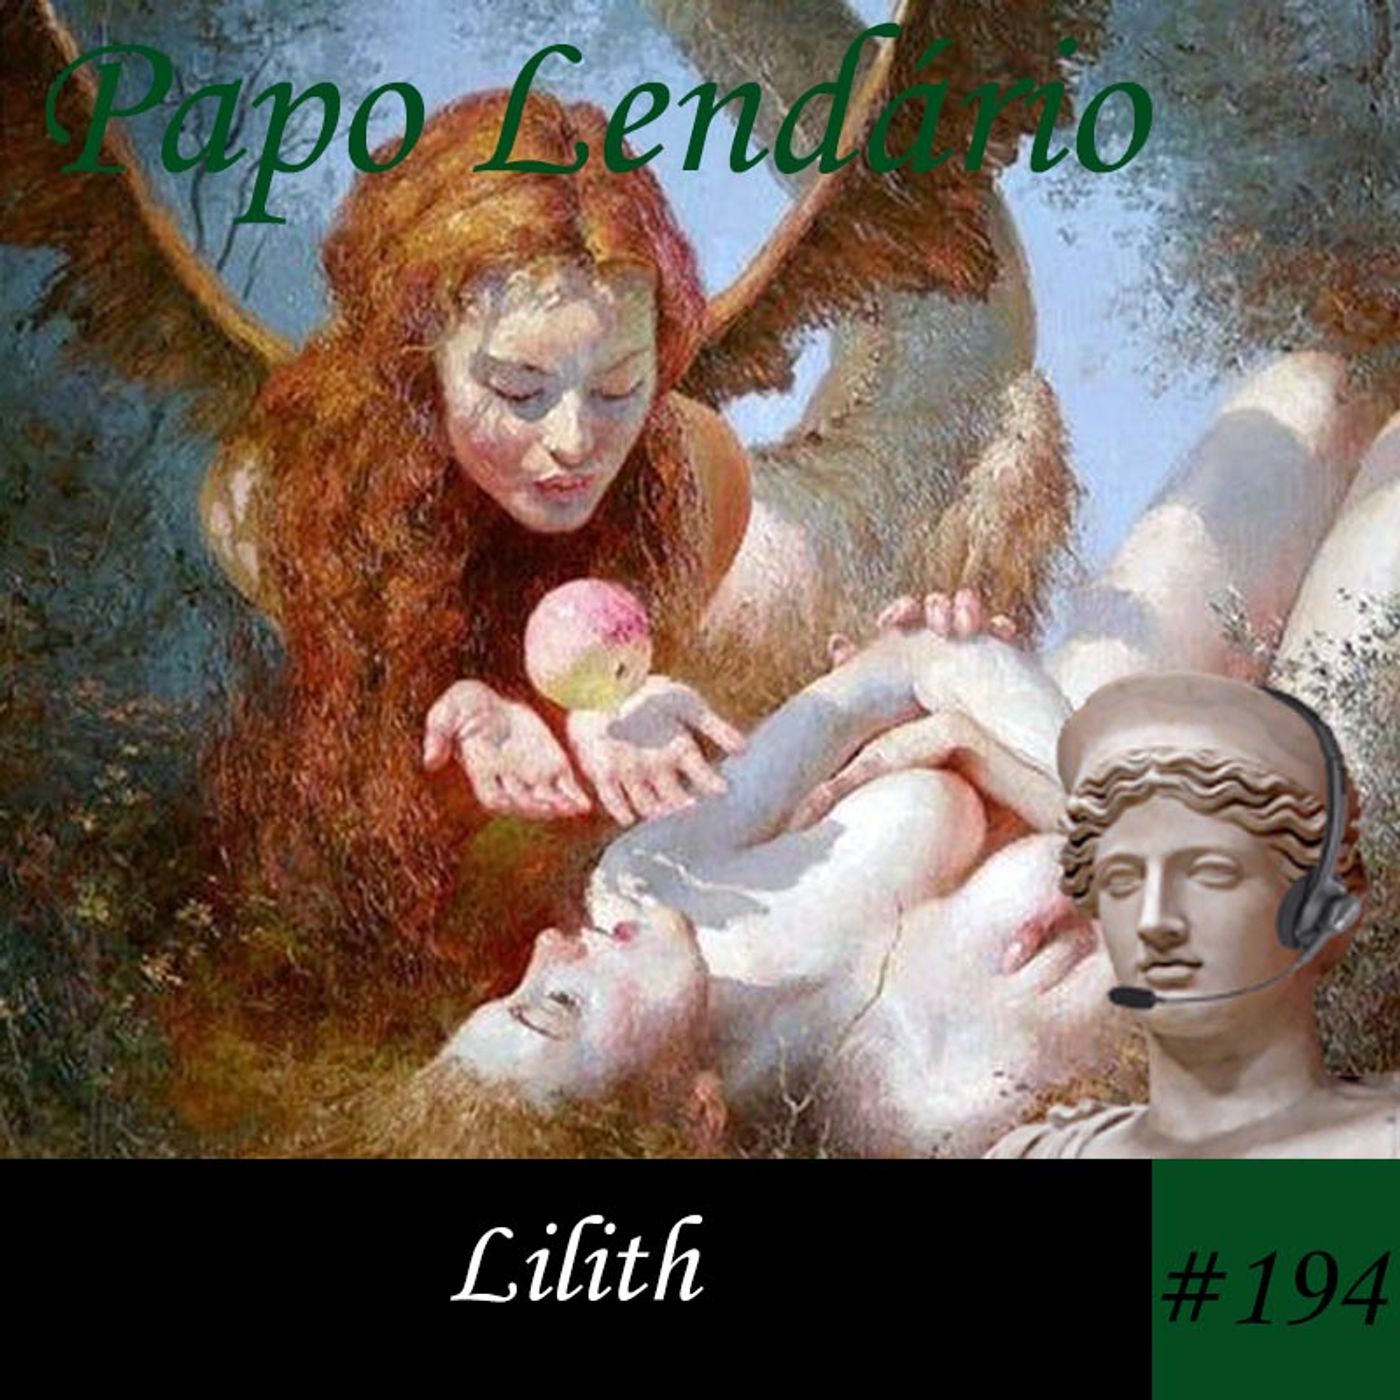 Papo Lendário #194 – Lilith